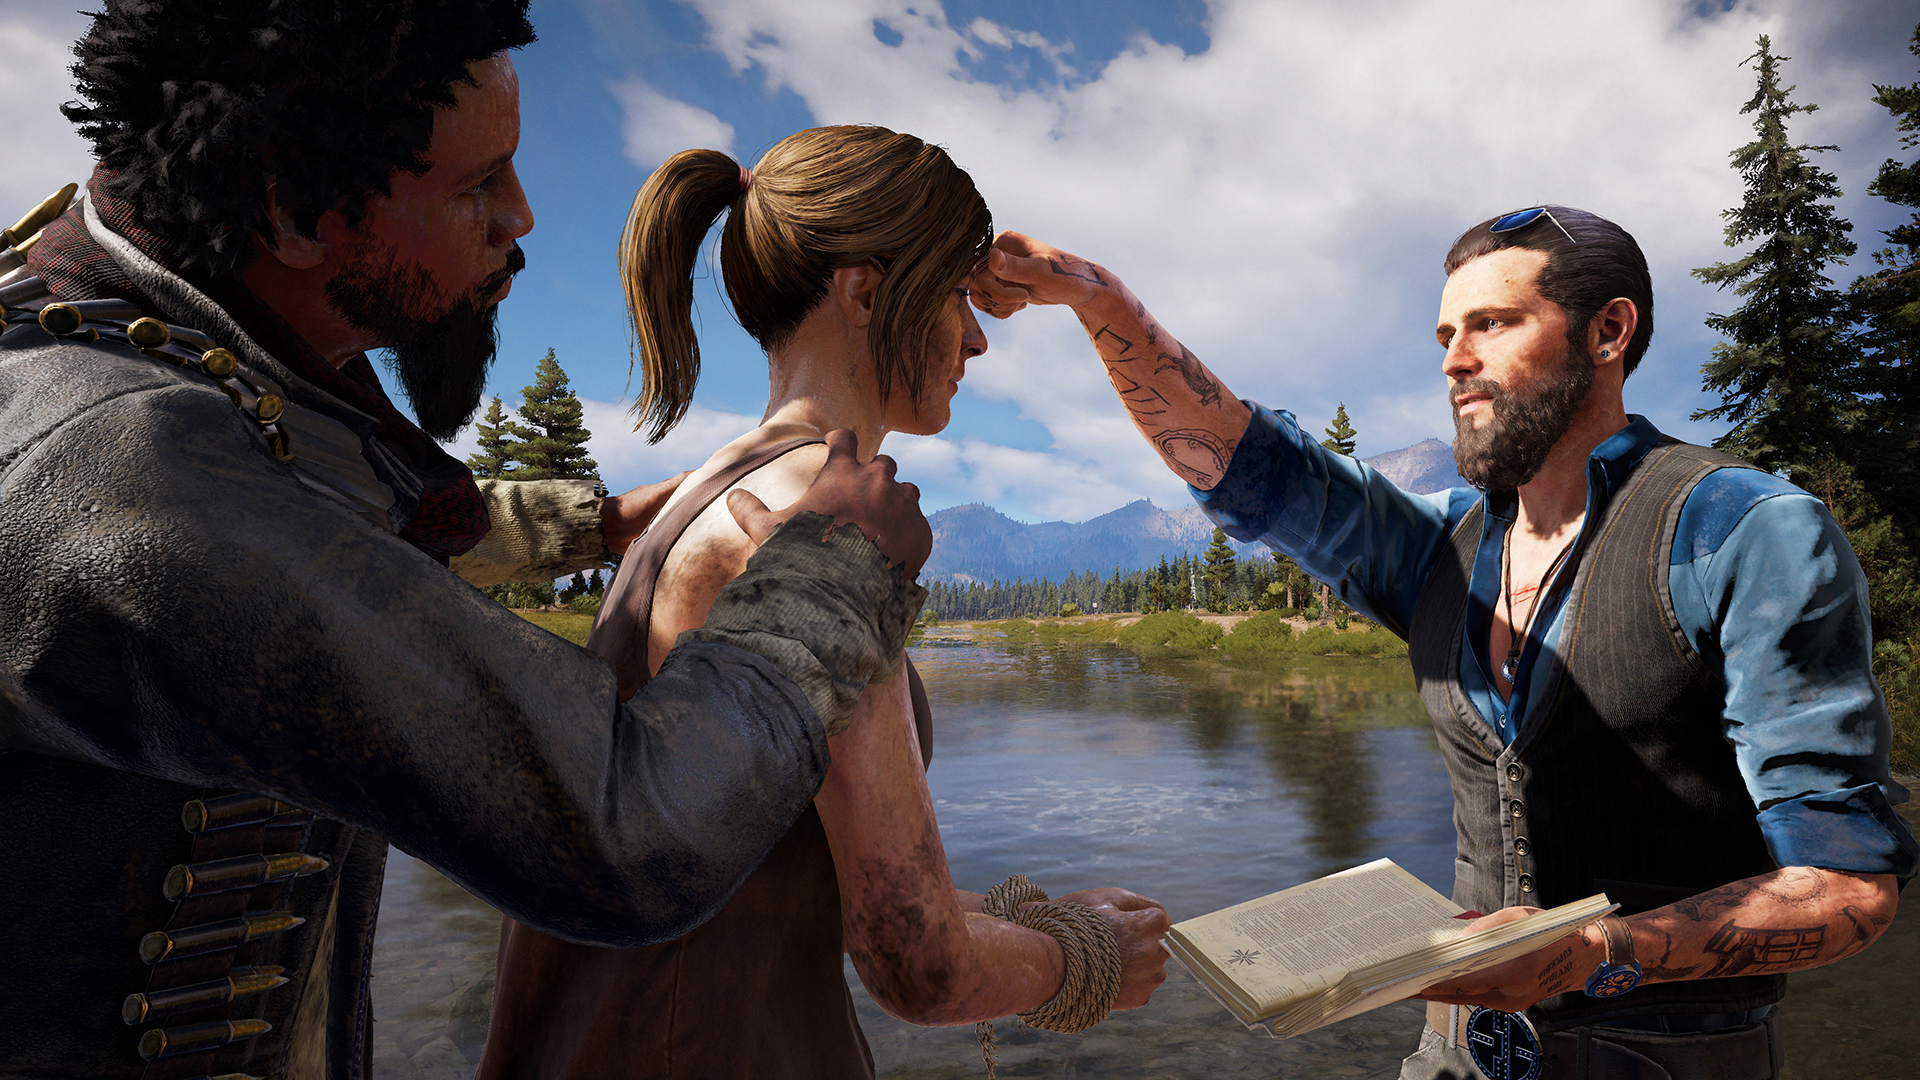 Far Cry 5 runs at native 4K resolution on Xbox One X